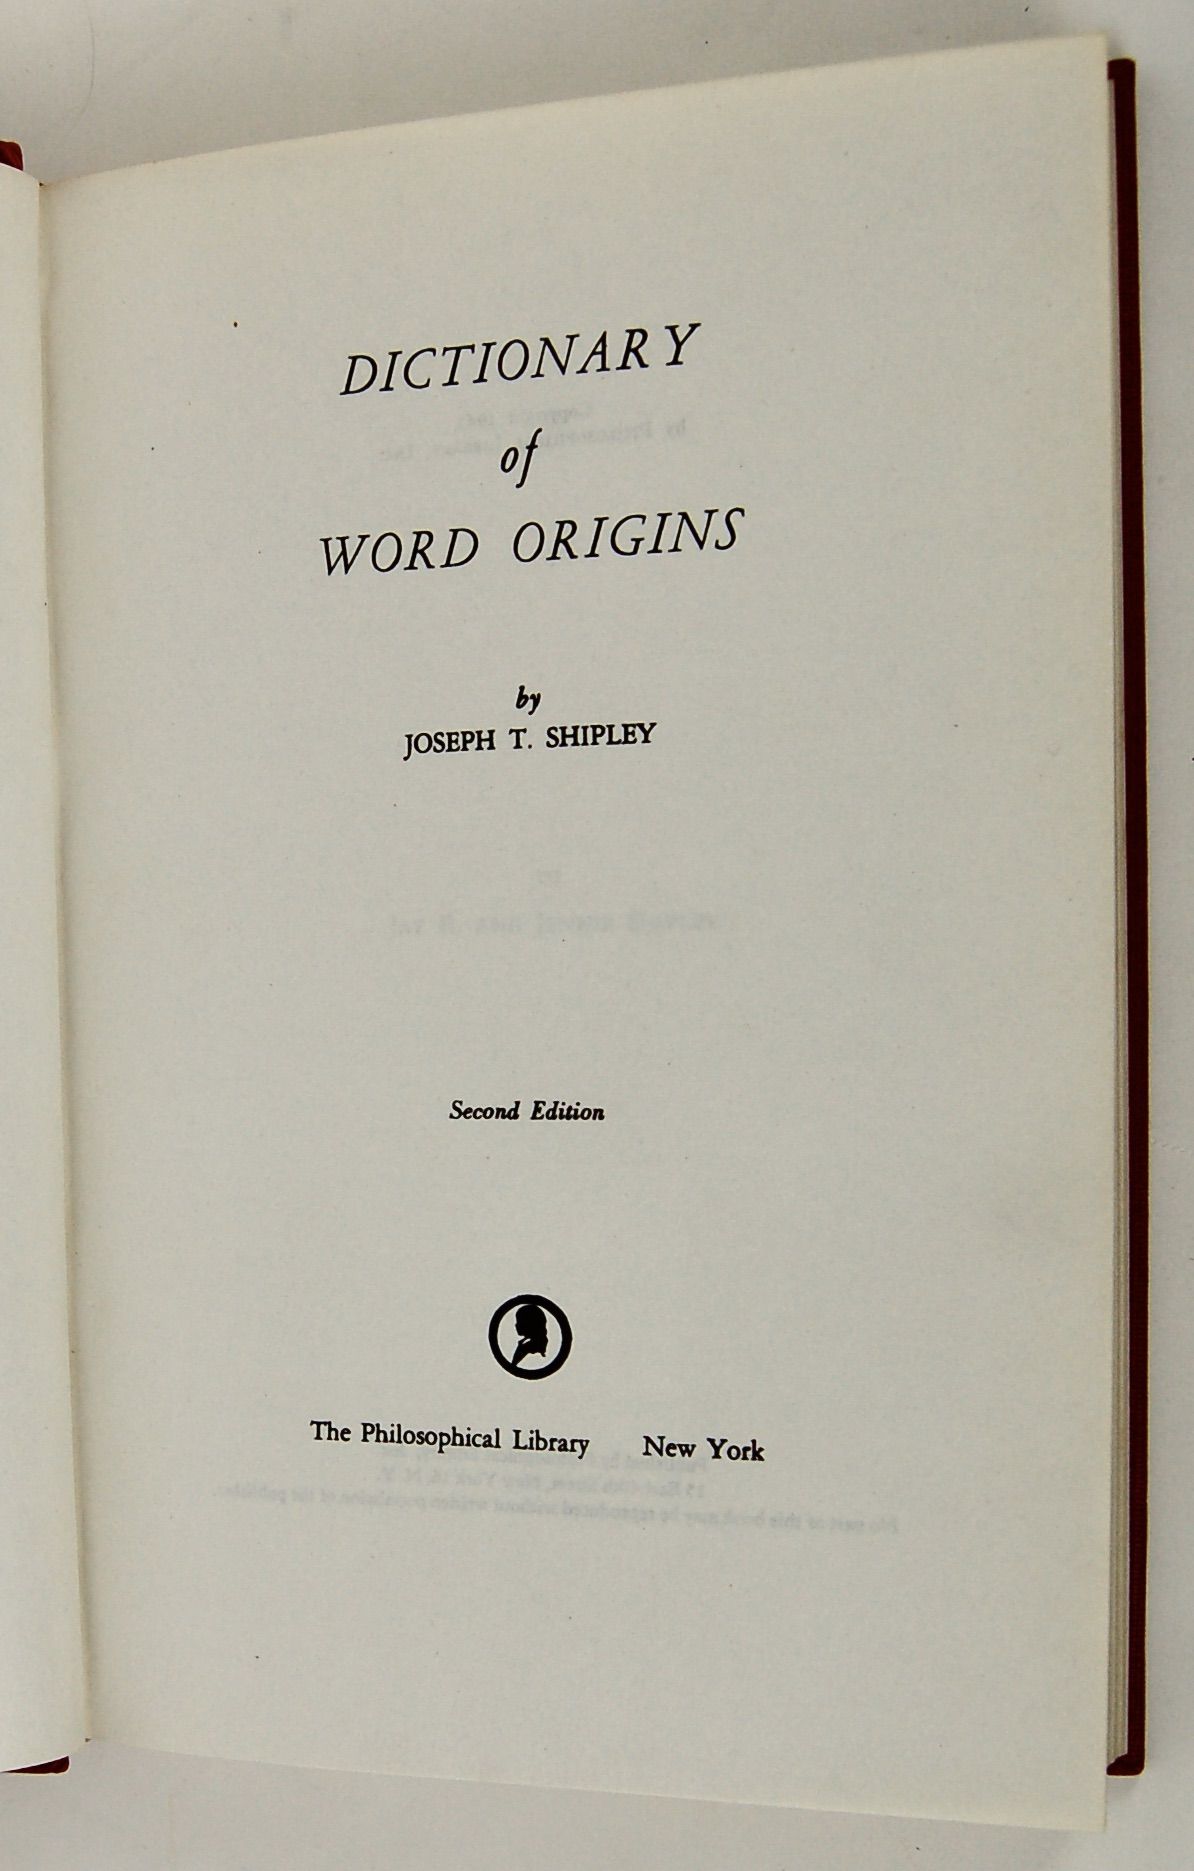  Dictionary of Word Origins.